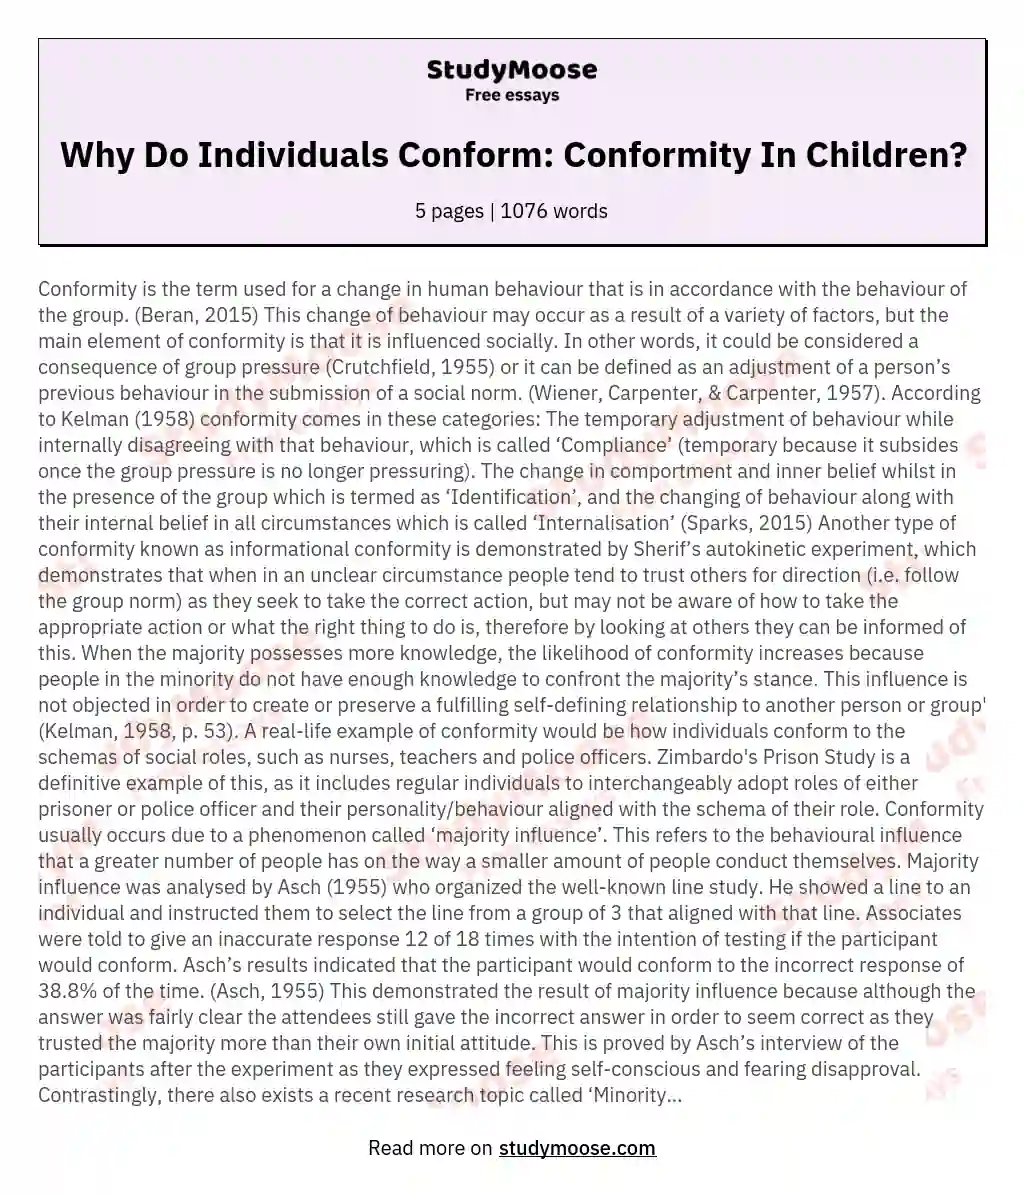 Why Do Individuals Conform: Conformity In Children?